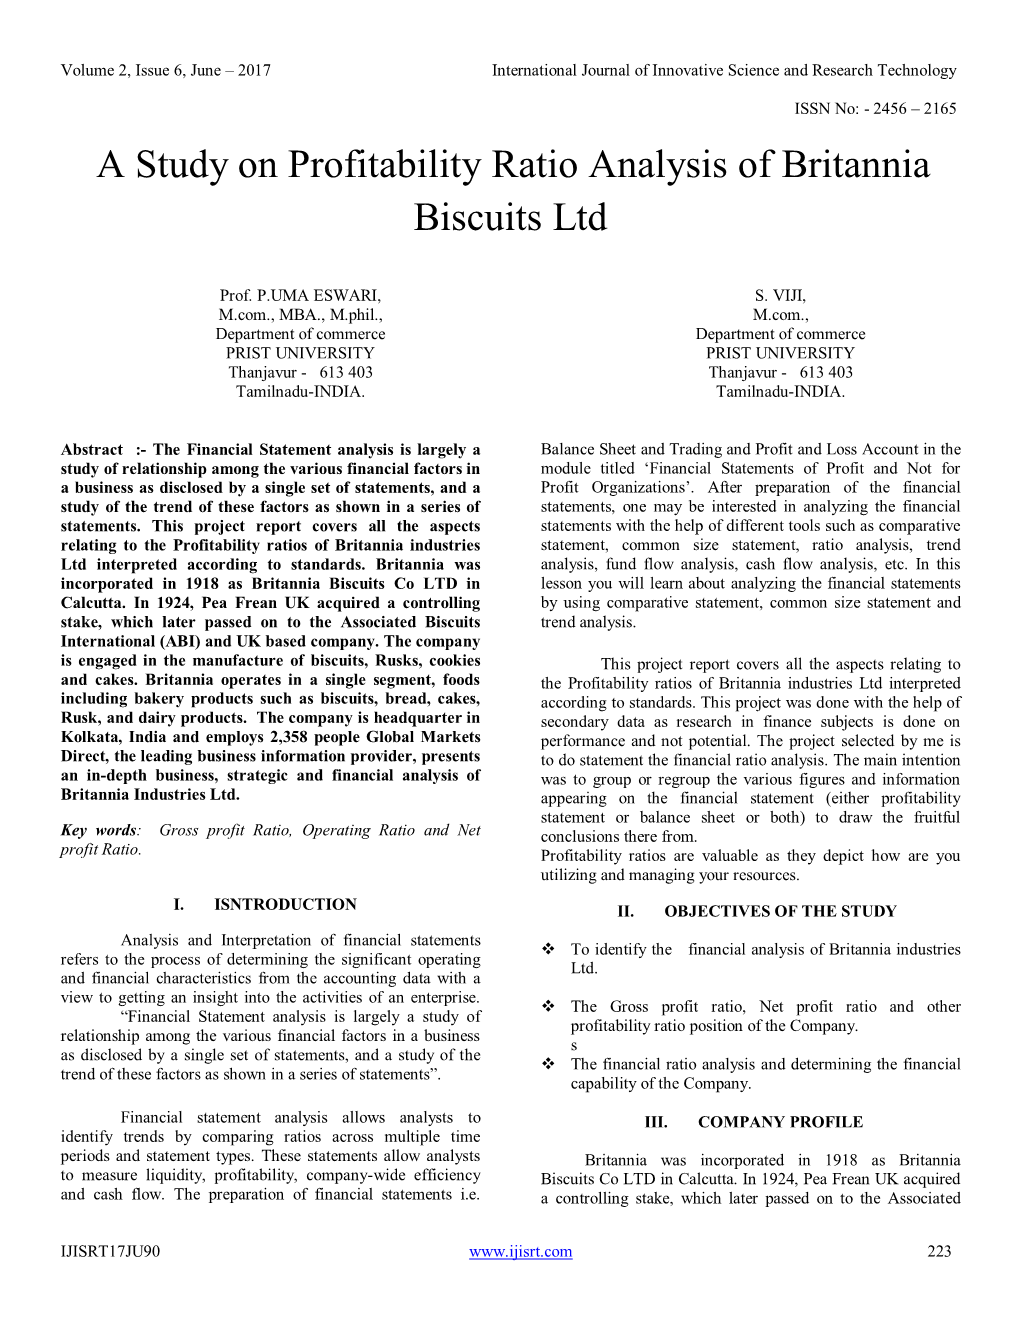 A Study on Profitability Ratio Analysis of Britannia Biscuits Ltd